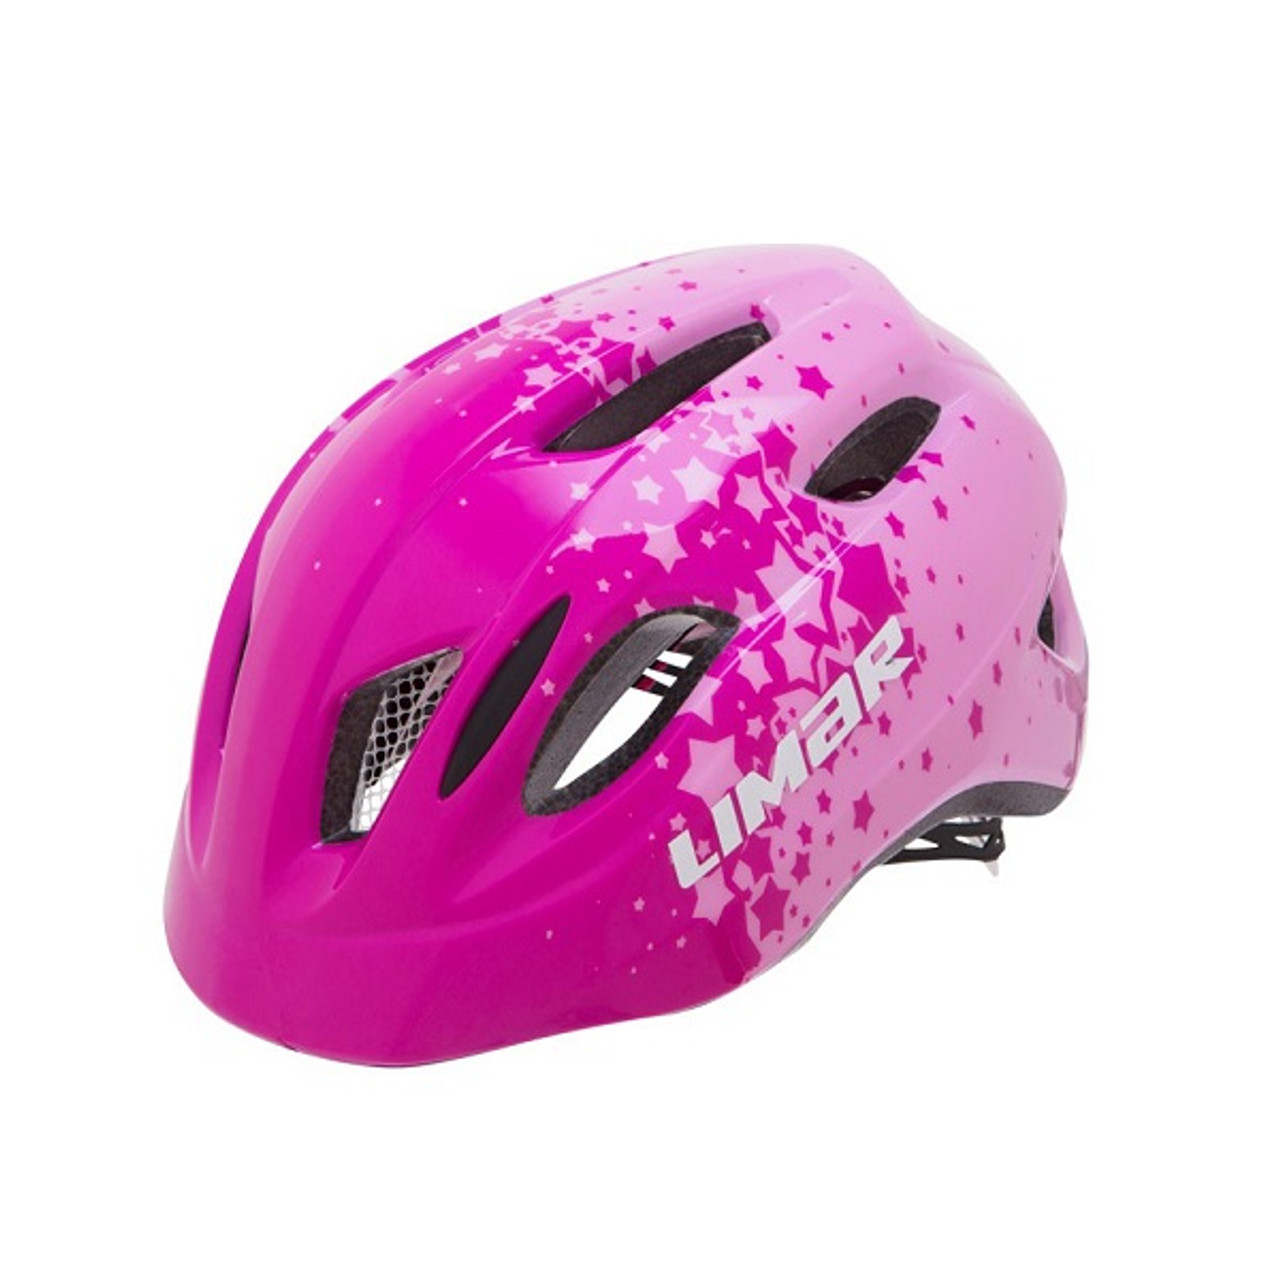 Limar Kids Pro Helmet - Star Pink